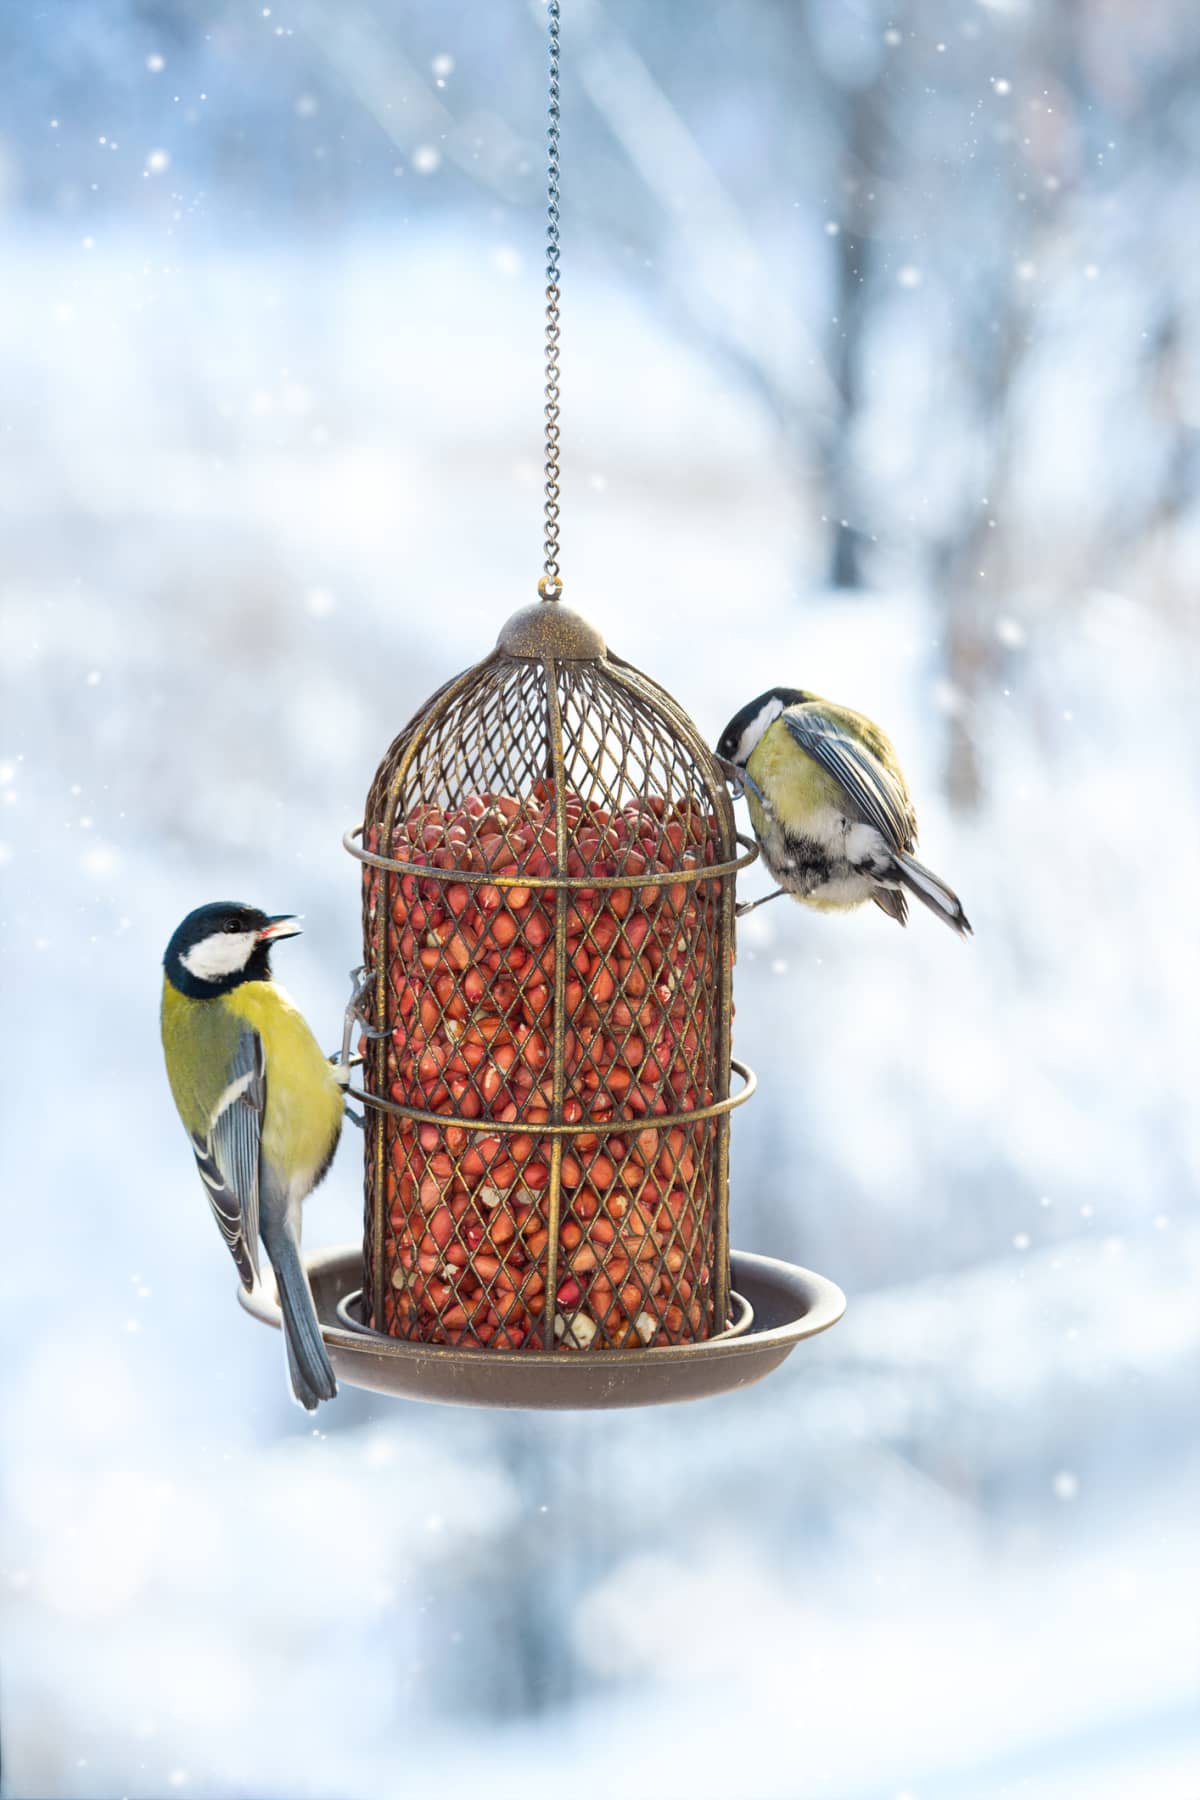 Pair of birds feeding from a bird feeder